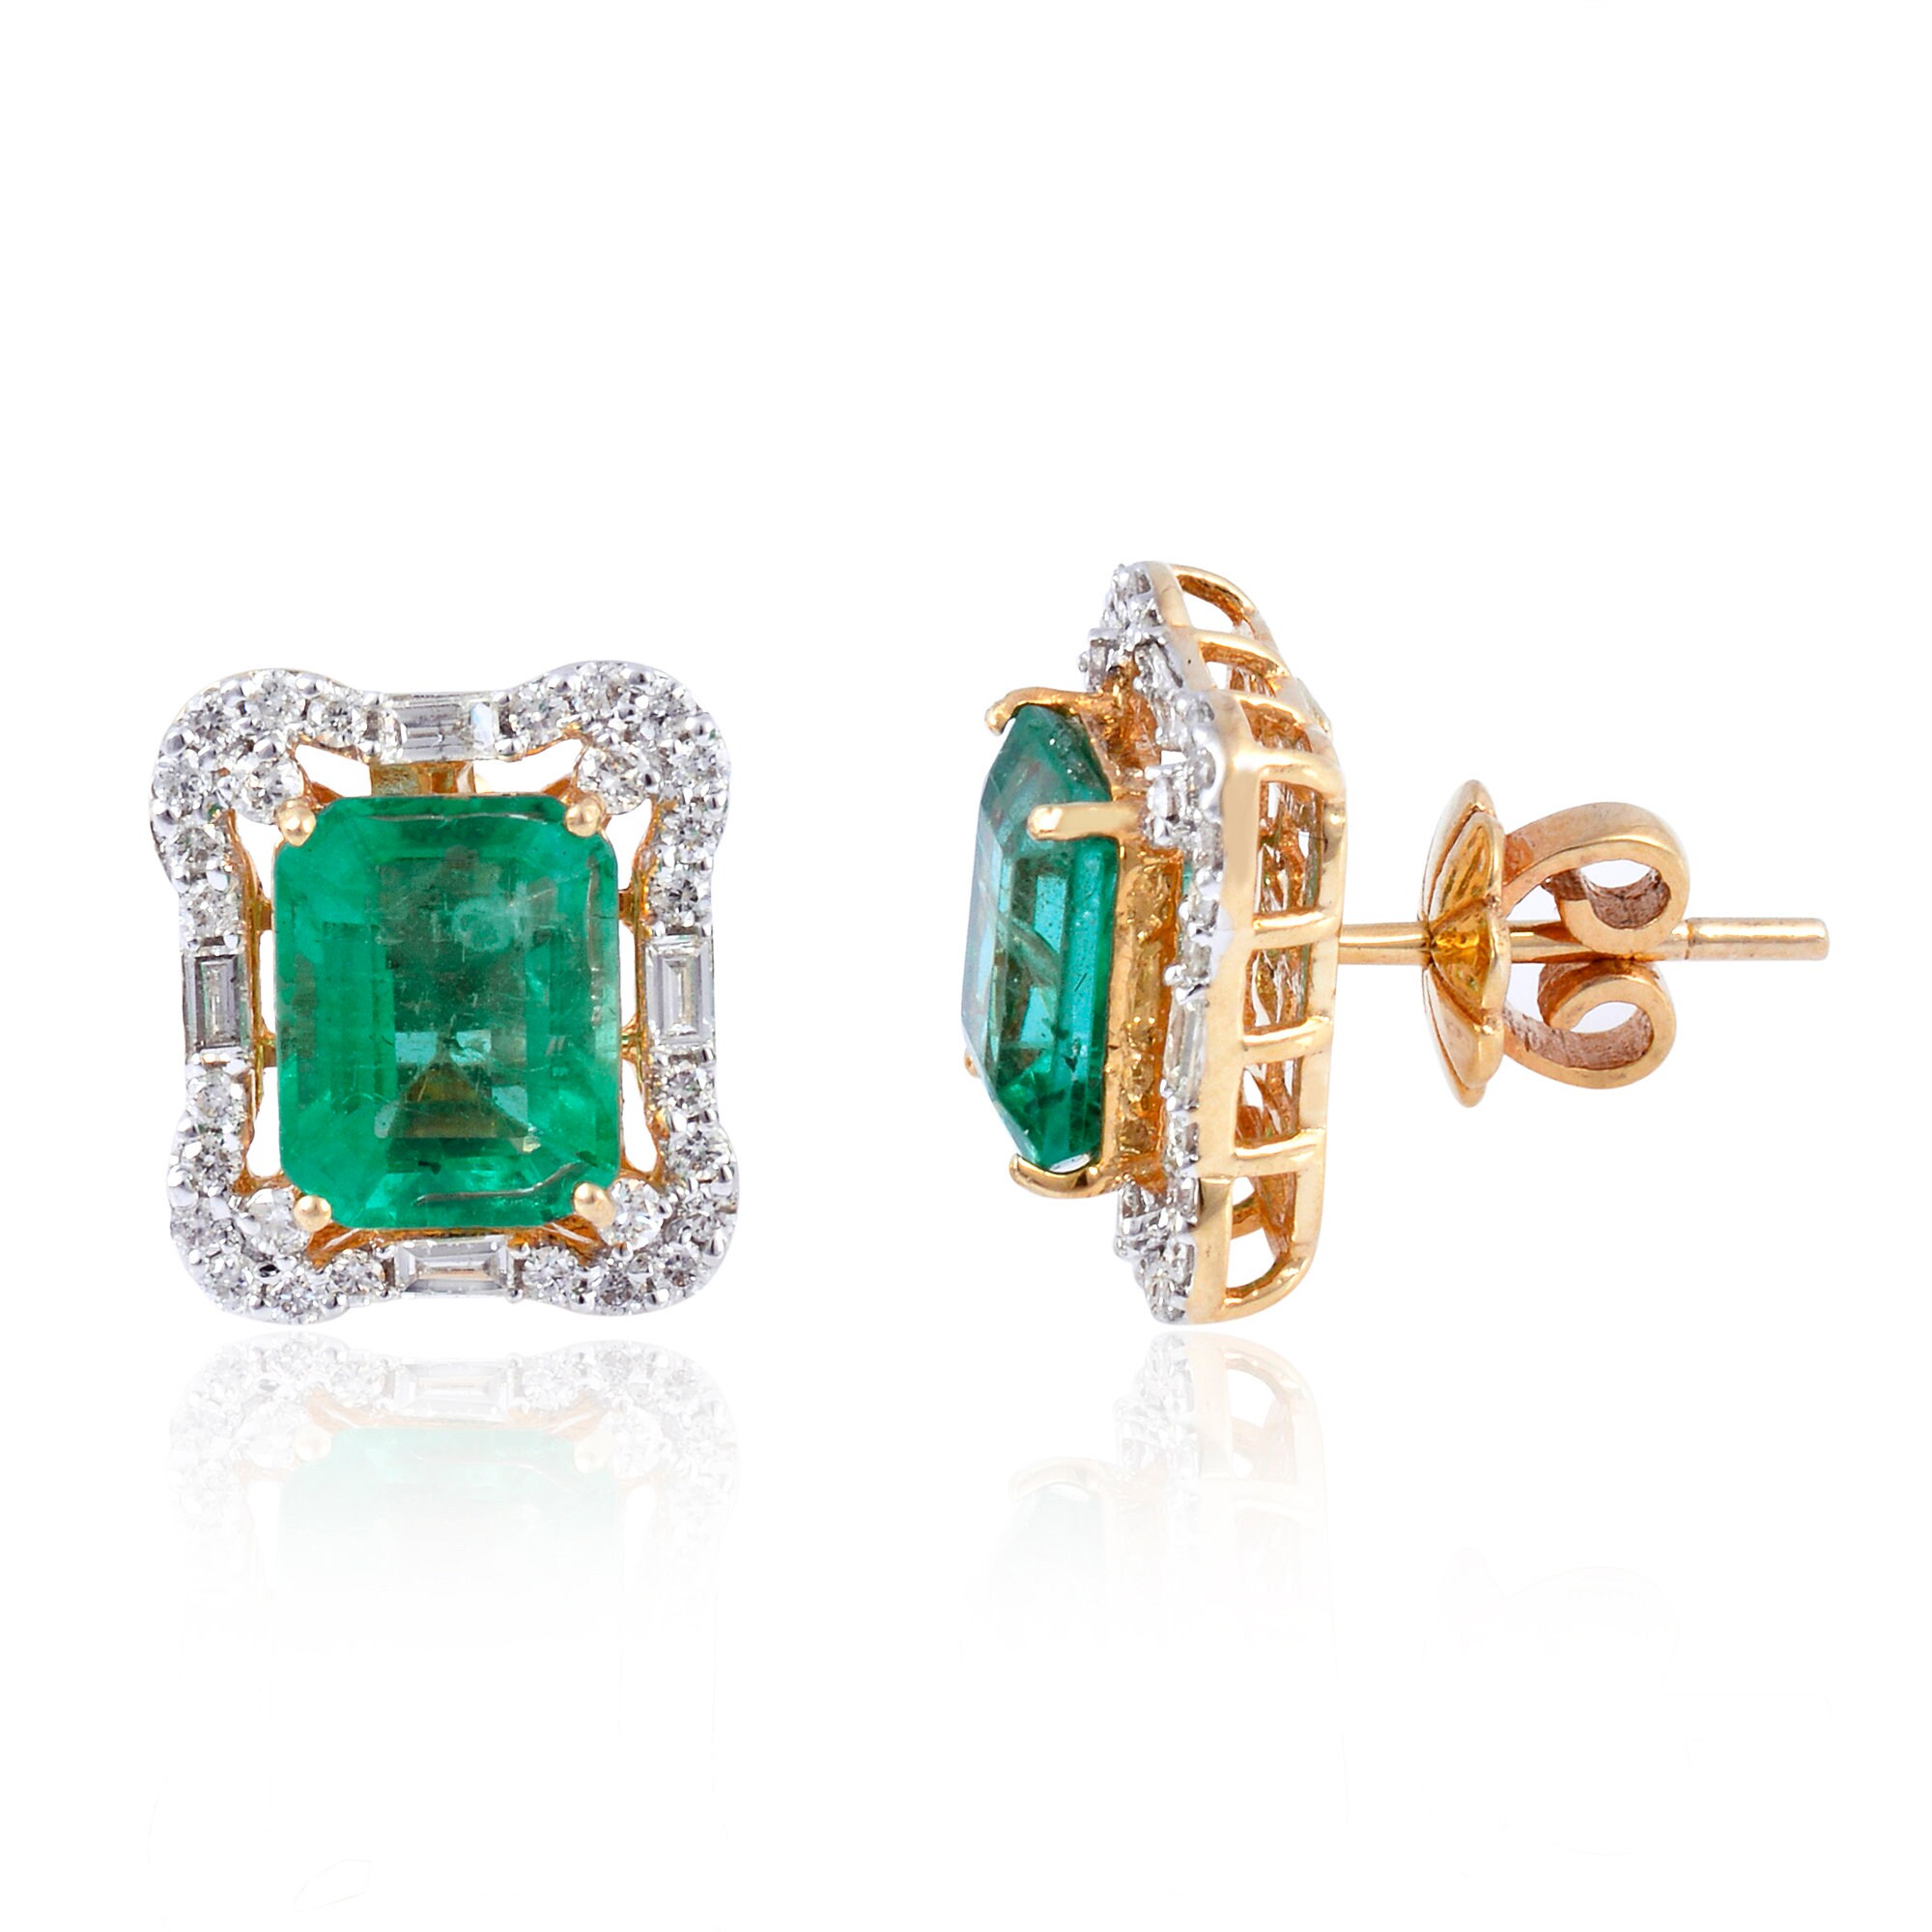 Natural Emerald Gemstone Stud Dainty Mini Jewelry 14K Yellow Gold Studs Diamond Halo Earrings Birthday & Anniversary Gift